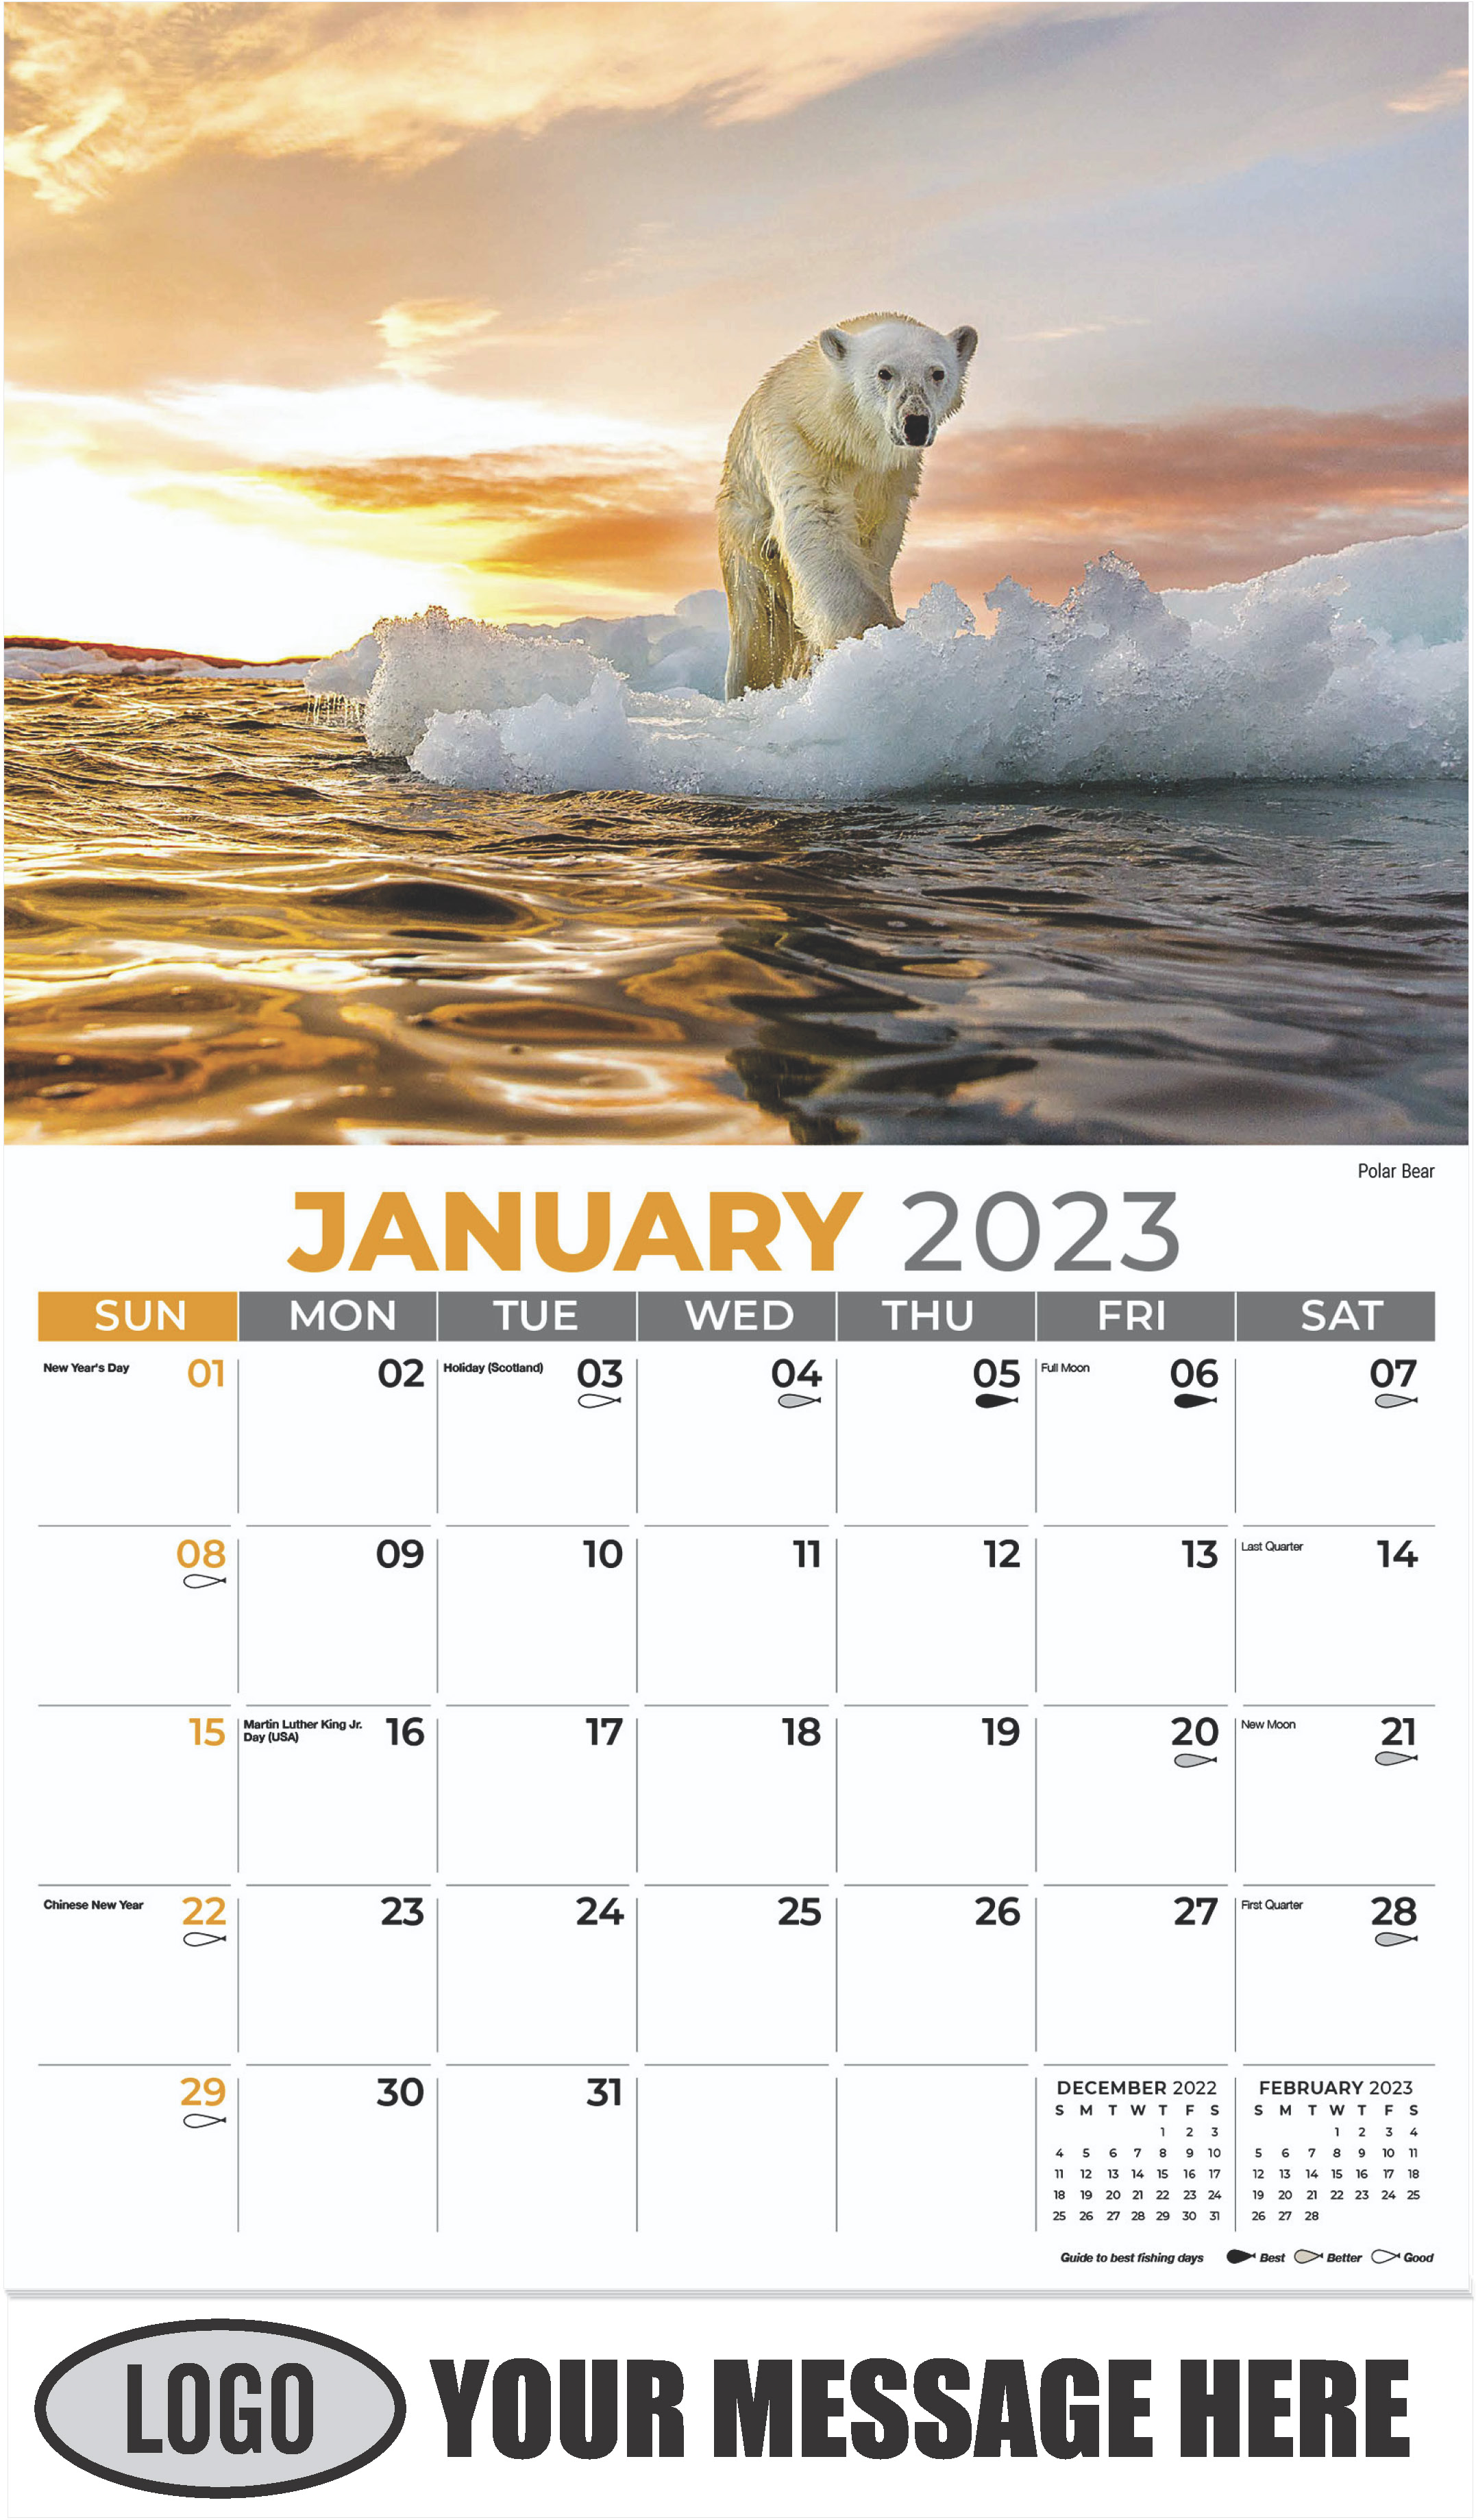 Polar Bear - January - North American Wildlife 2023 Promotional Calendar